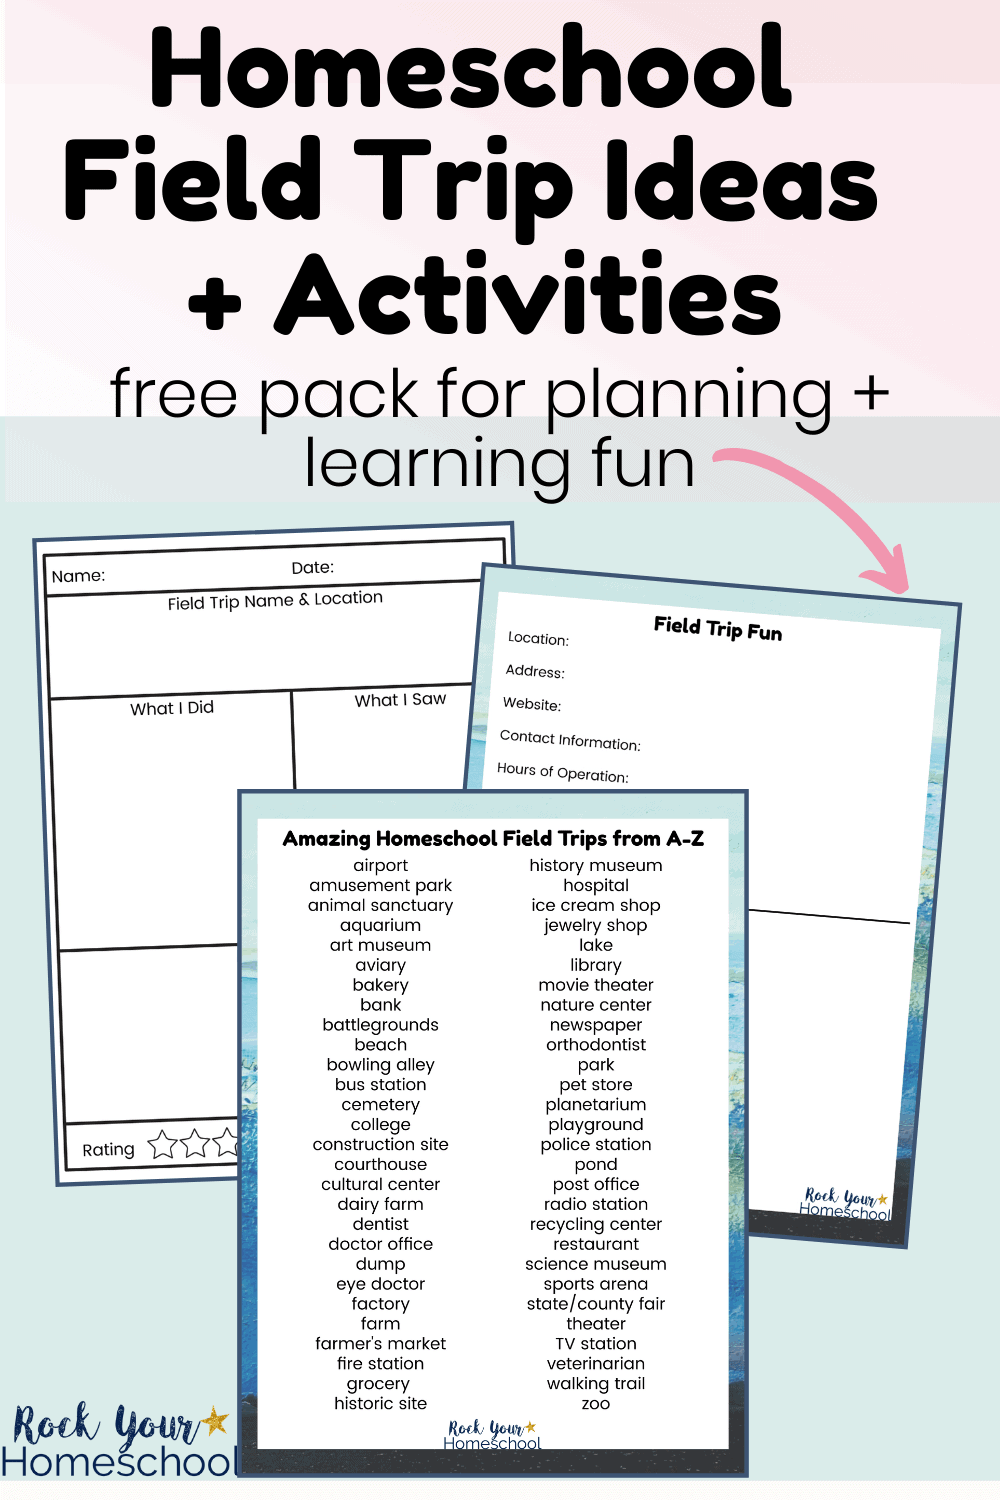 Homeschool Field Trip Ideas for Fantastic Learning Fun (Free List & More)